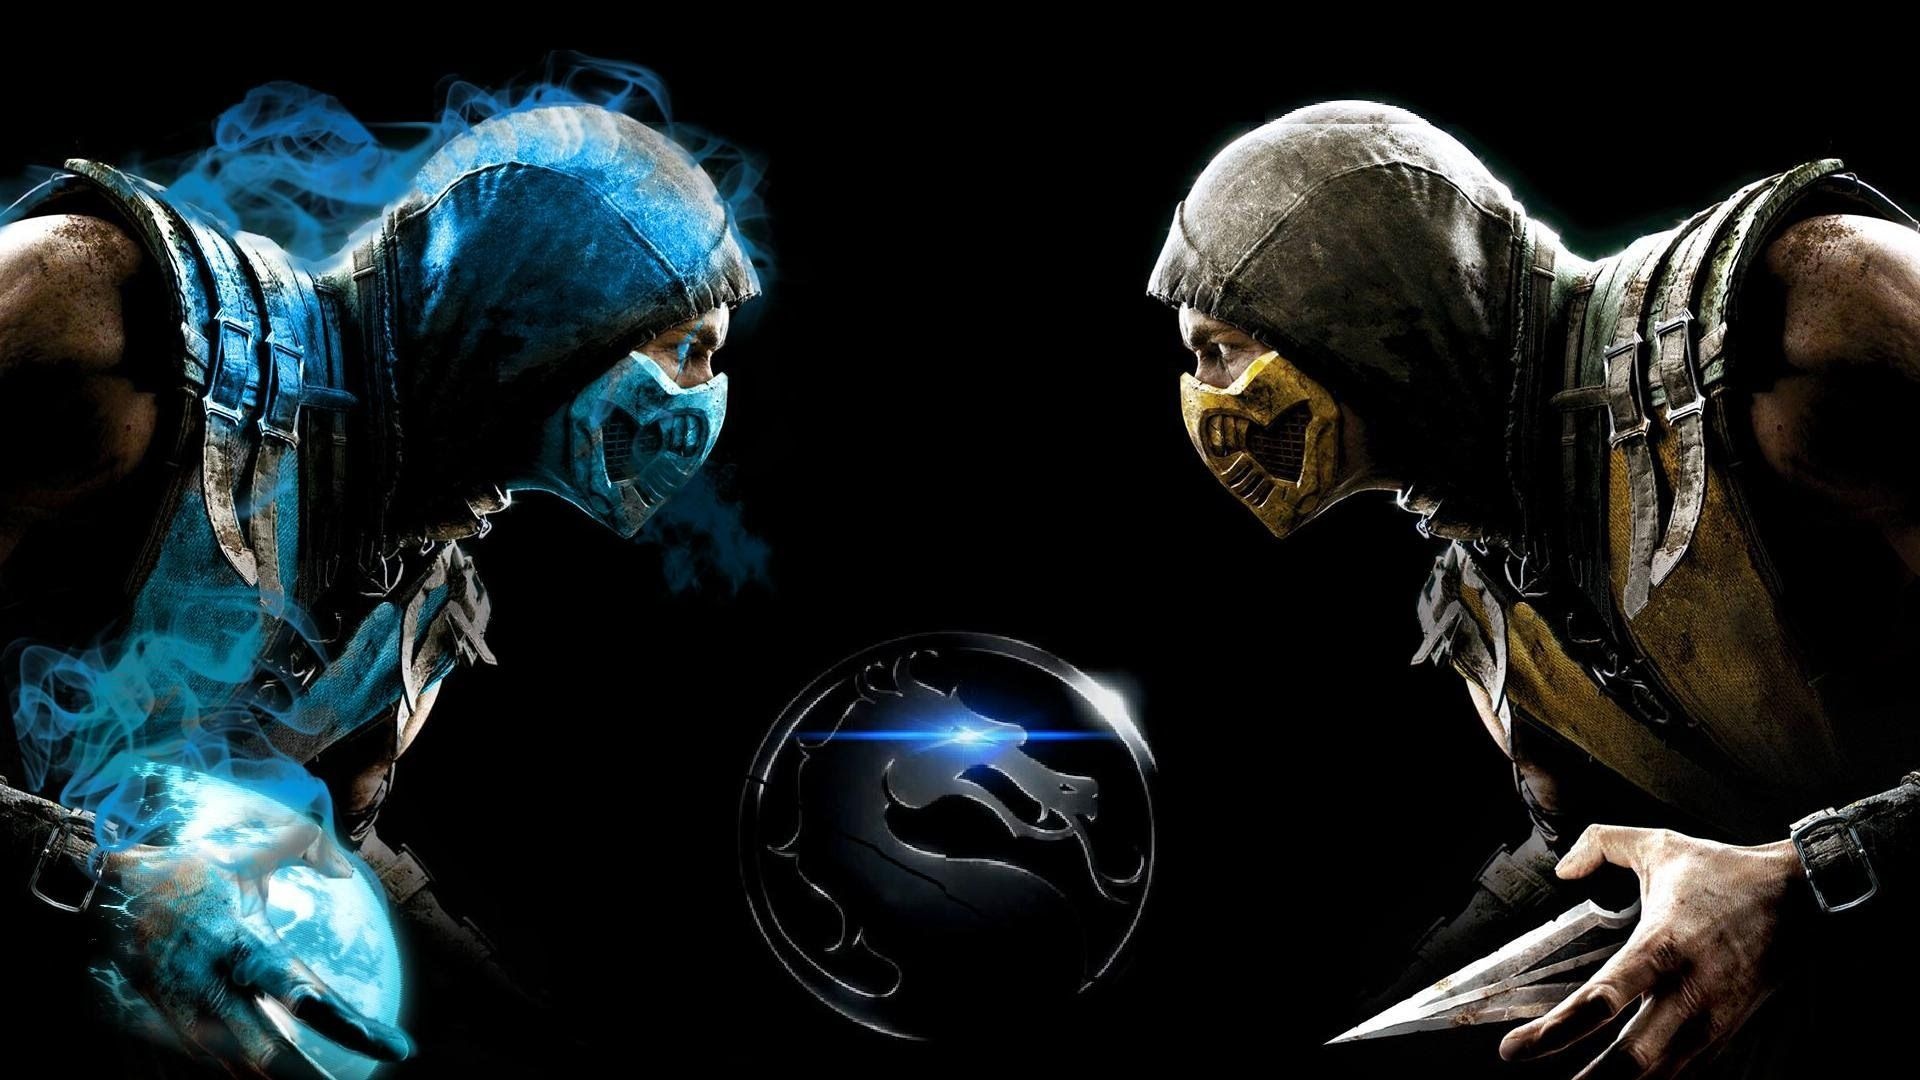 Mortal Kombat Scorpion vs Sub-Zero, Top free backgrounds, 1920x1080 Full HD Desktop